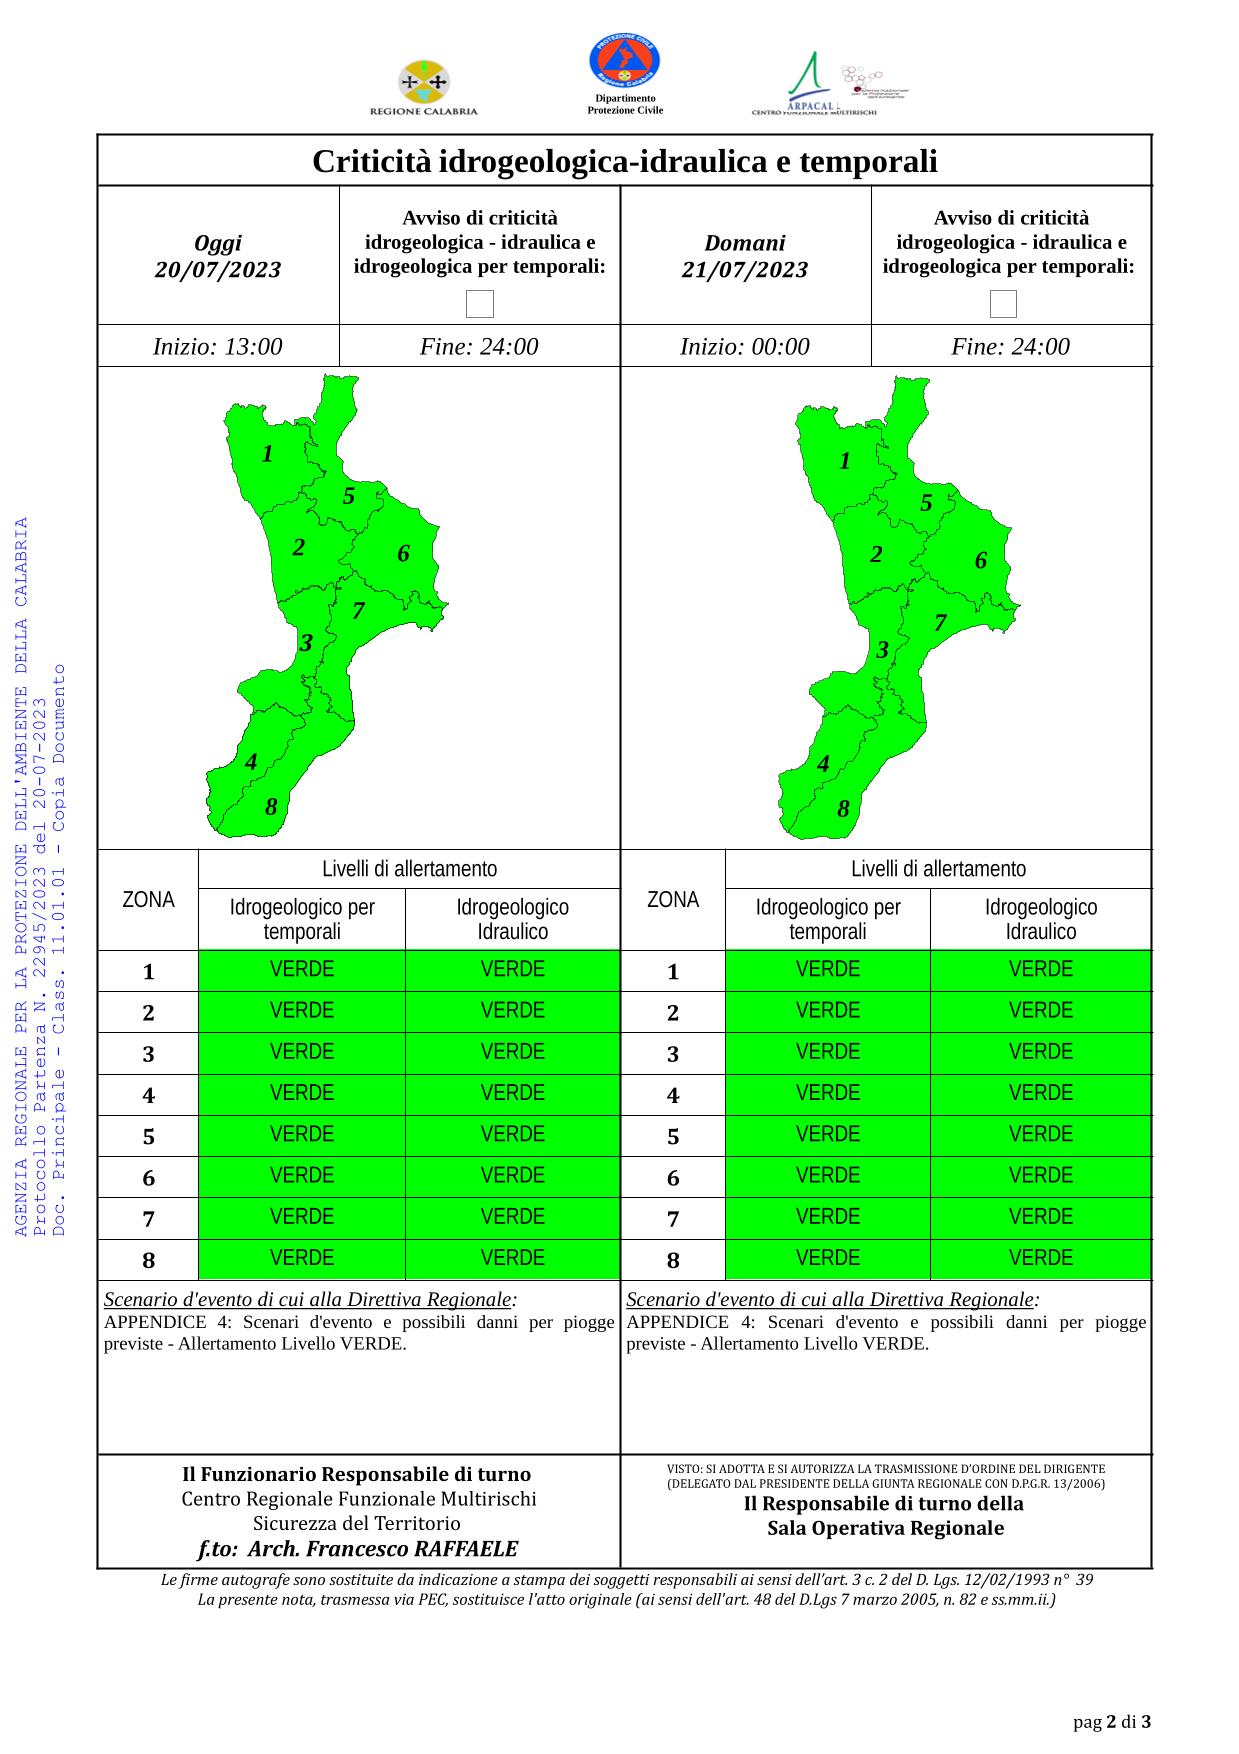 Criticità idrogeologica-idraulica e temporali in Calabria 20-07-2023